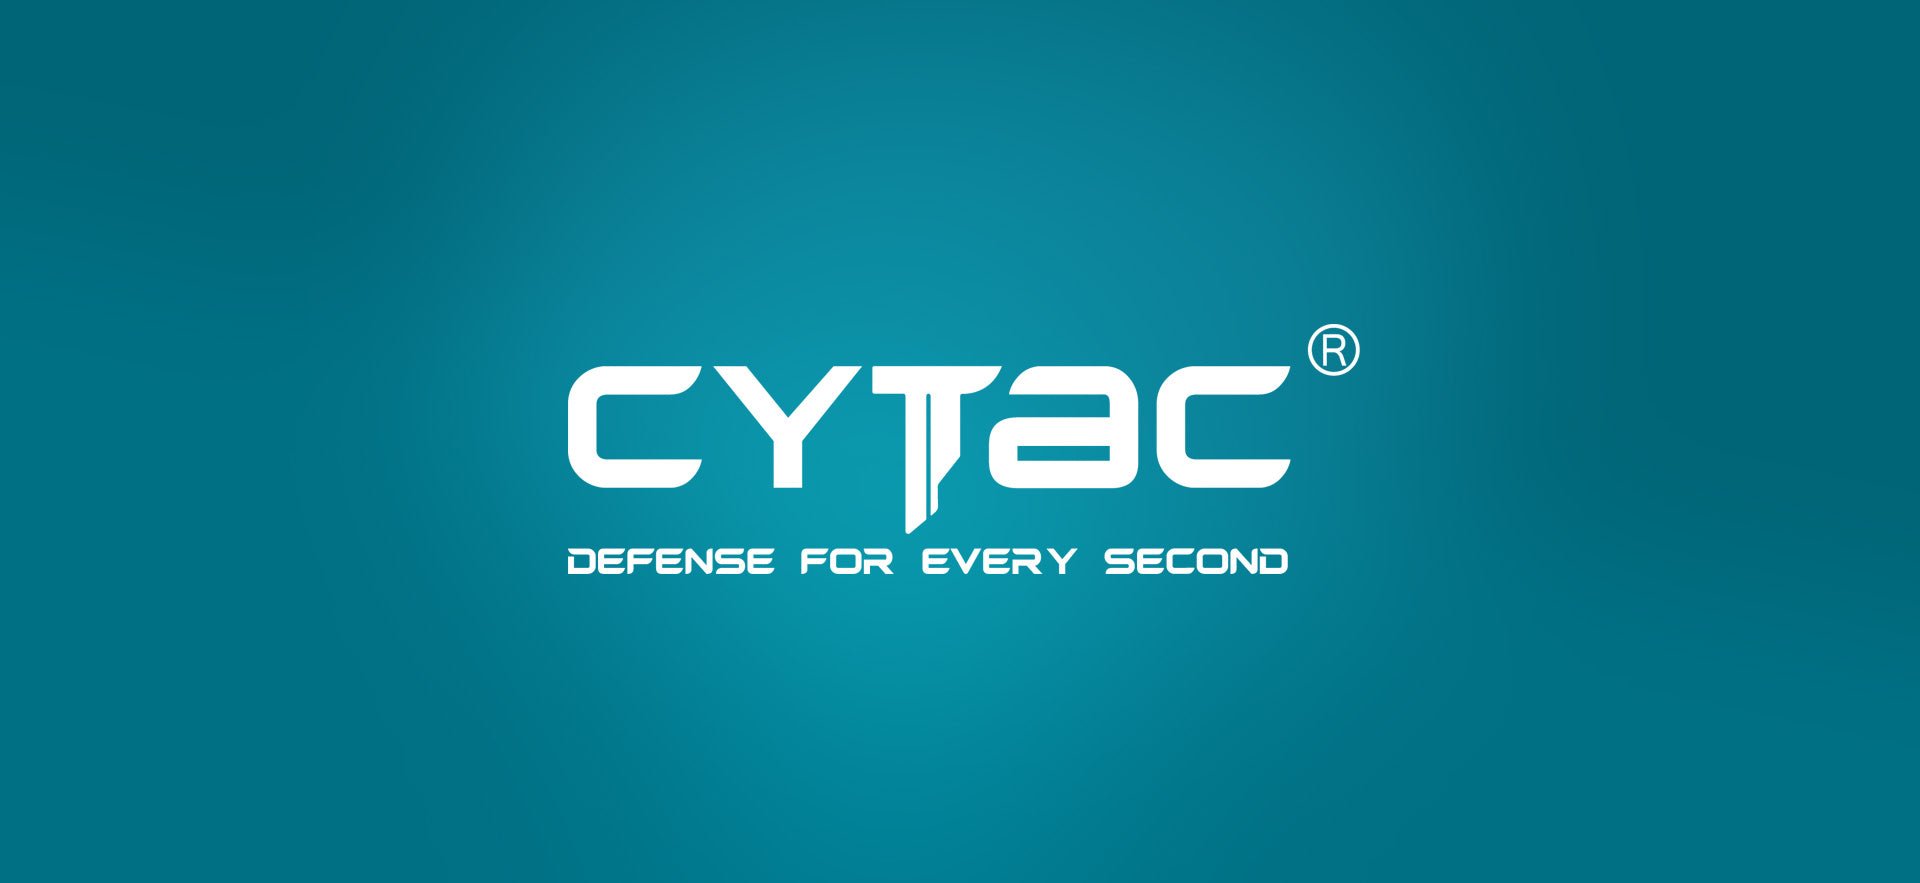 Cytac - Weekend-Warrior.Shop